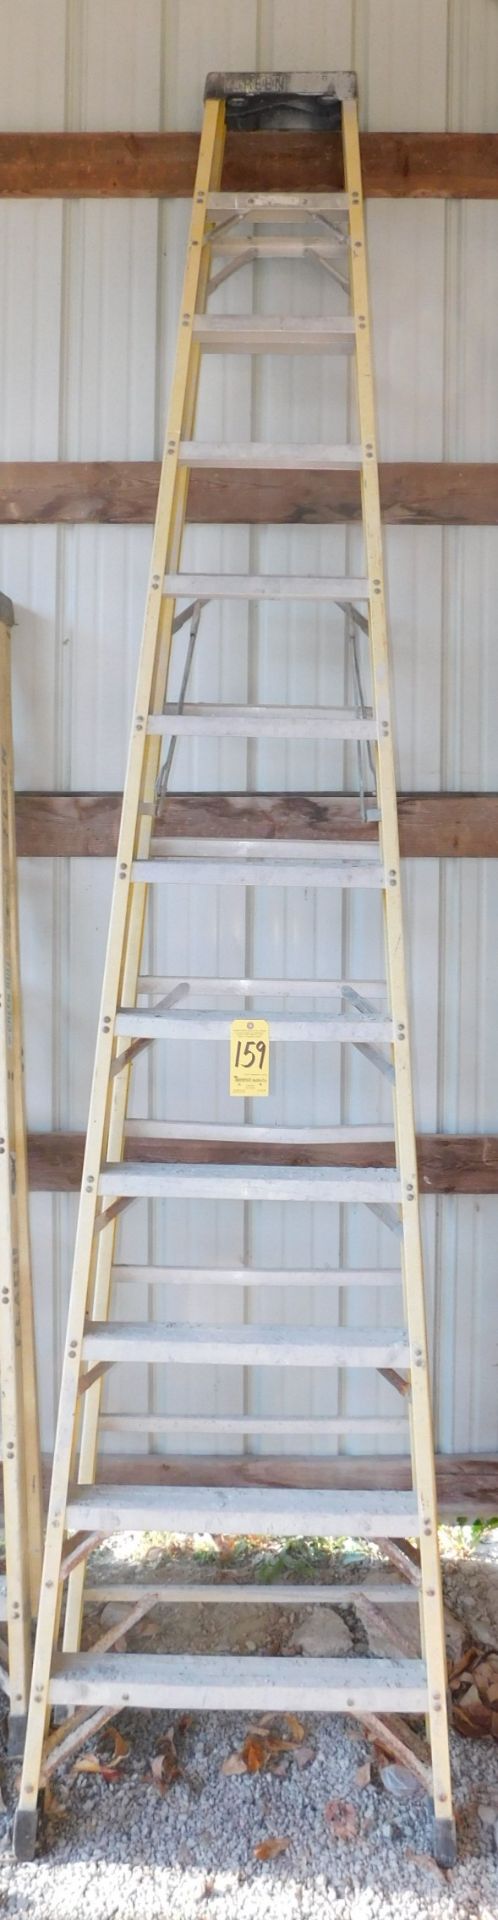 Green Bull 12' Fiberglass Step Ladder